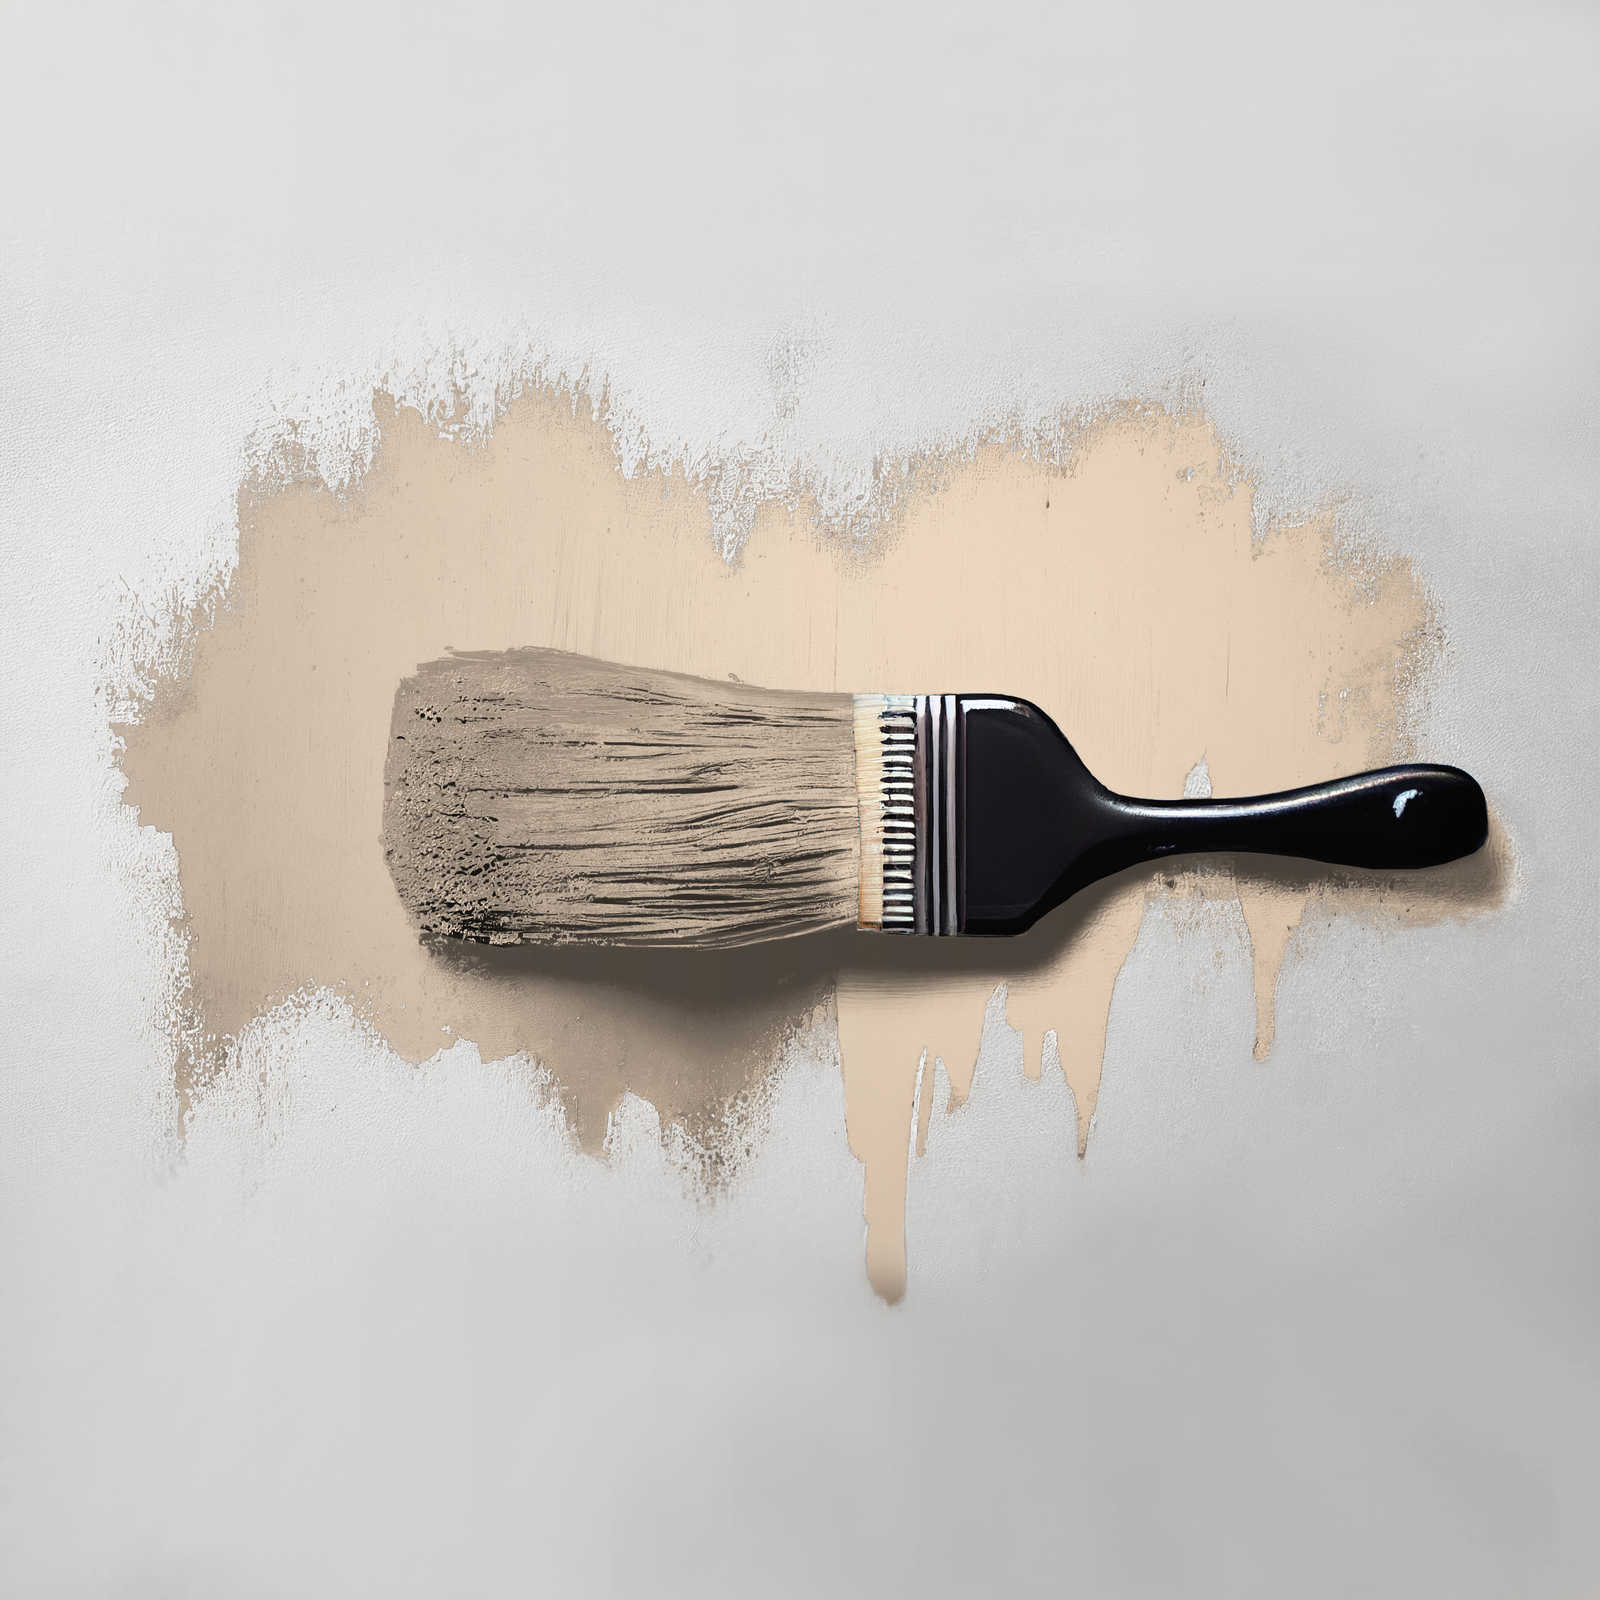             Pintura mural TCK5008 »Humble Hummus« en beige cálido – 5,0 litro
        